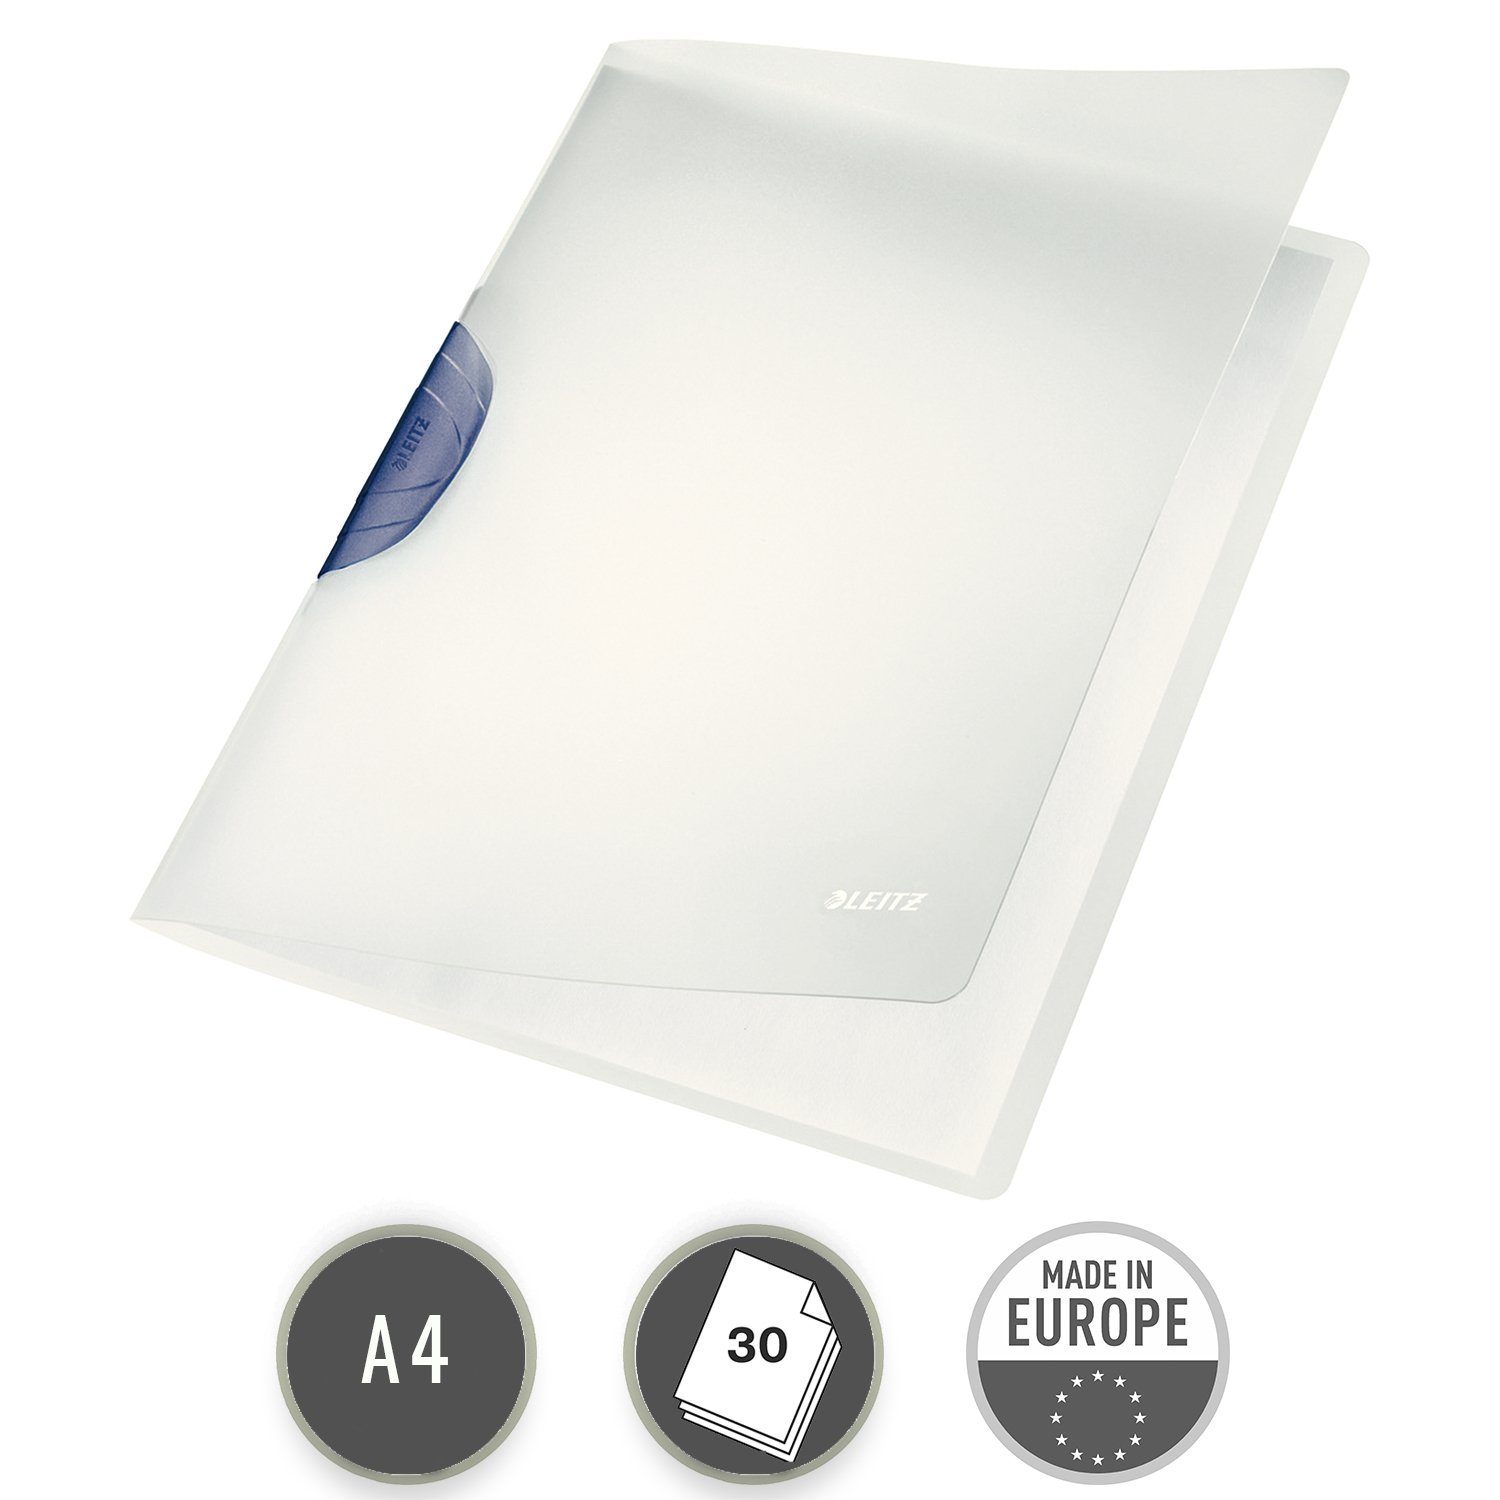 LEITZ Schulheft ColorClip Magic Hefter, für bis zu 30 Blätter (80 g/m), drehbarer Clip-Verschluss dunkelgrau